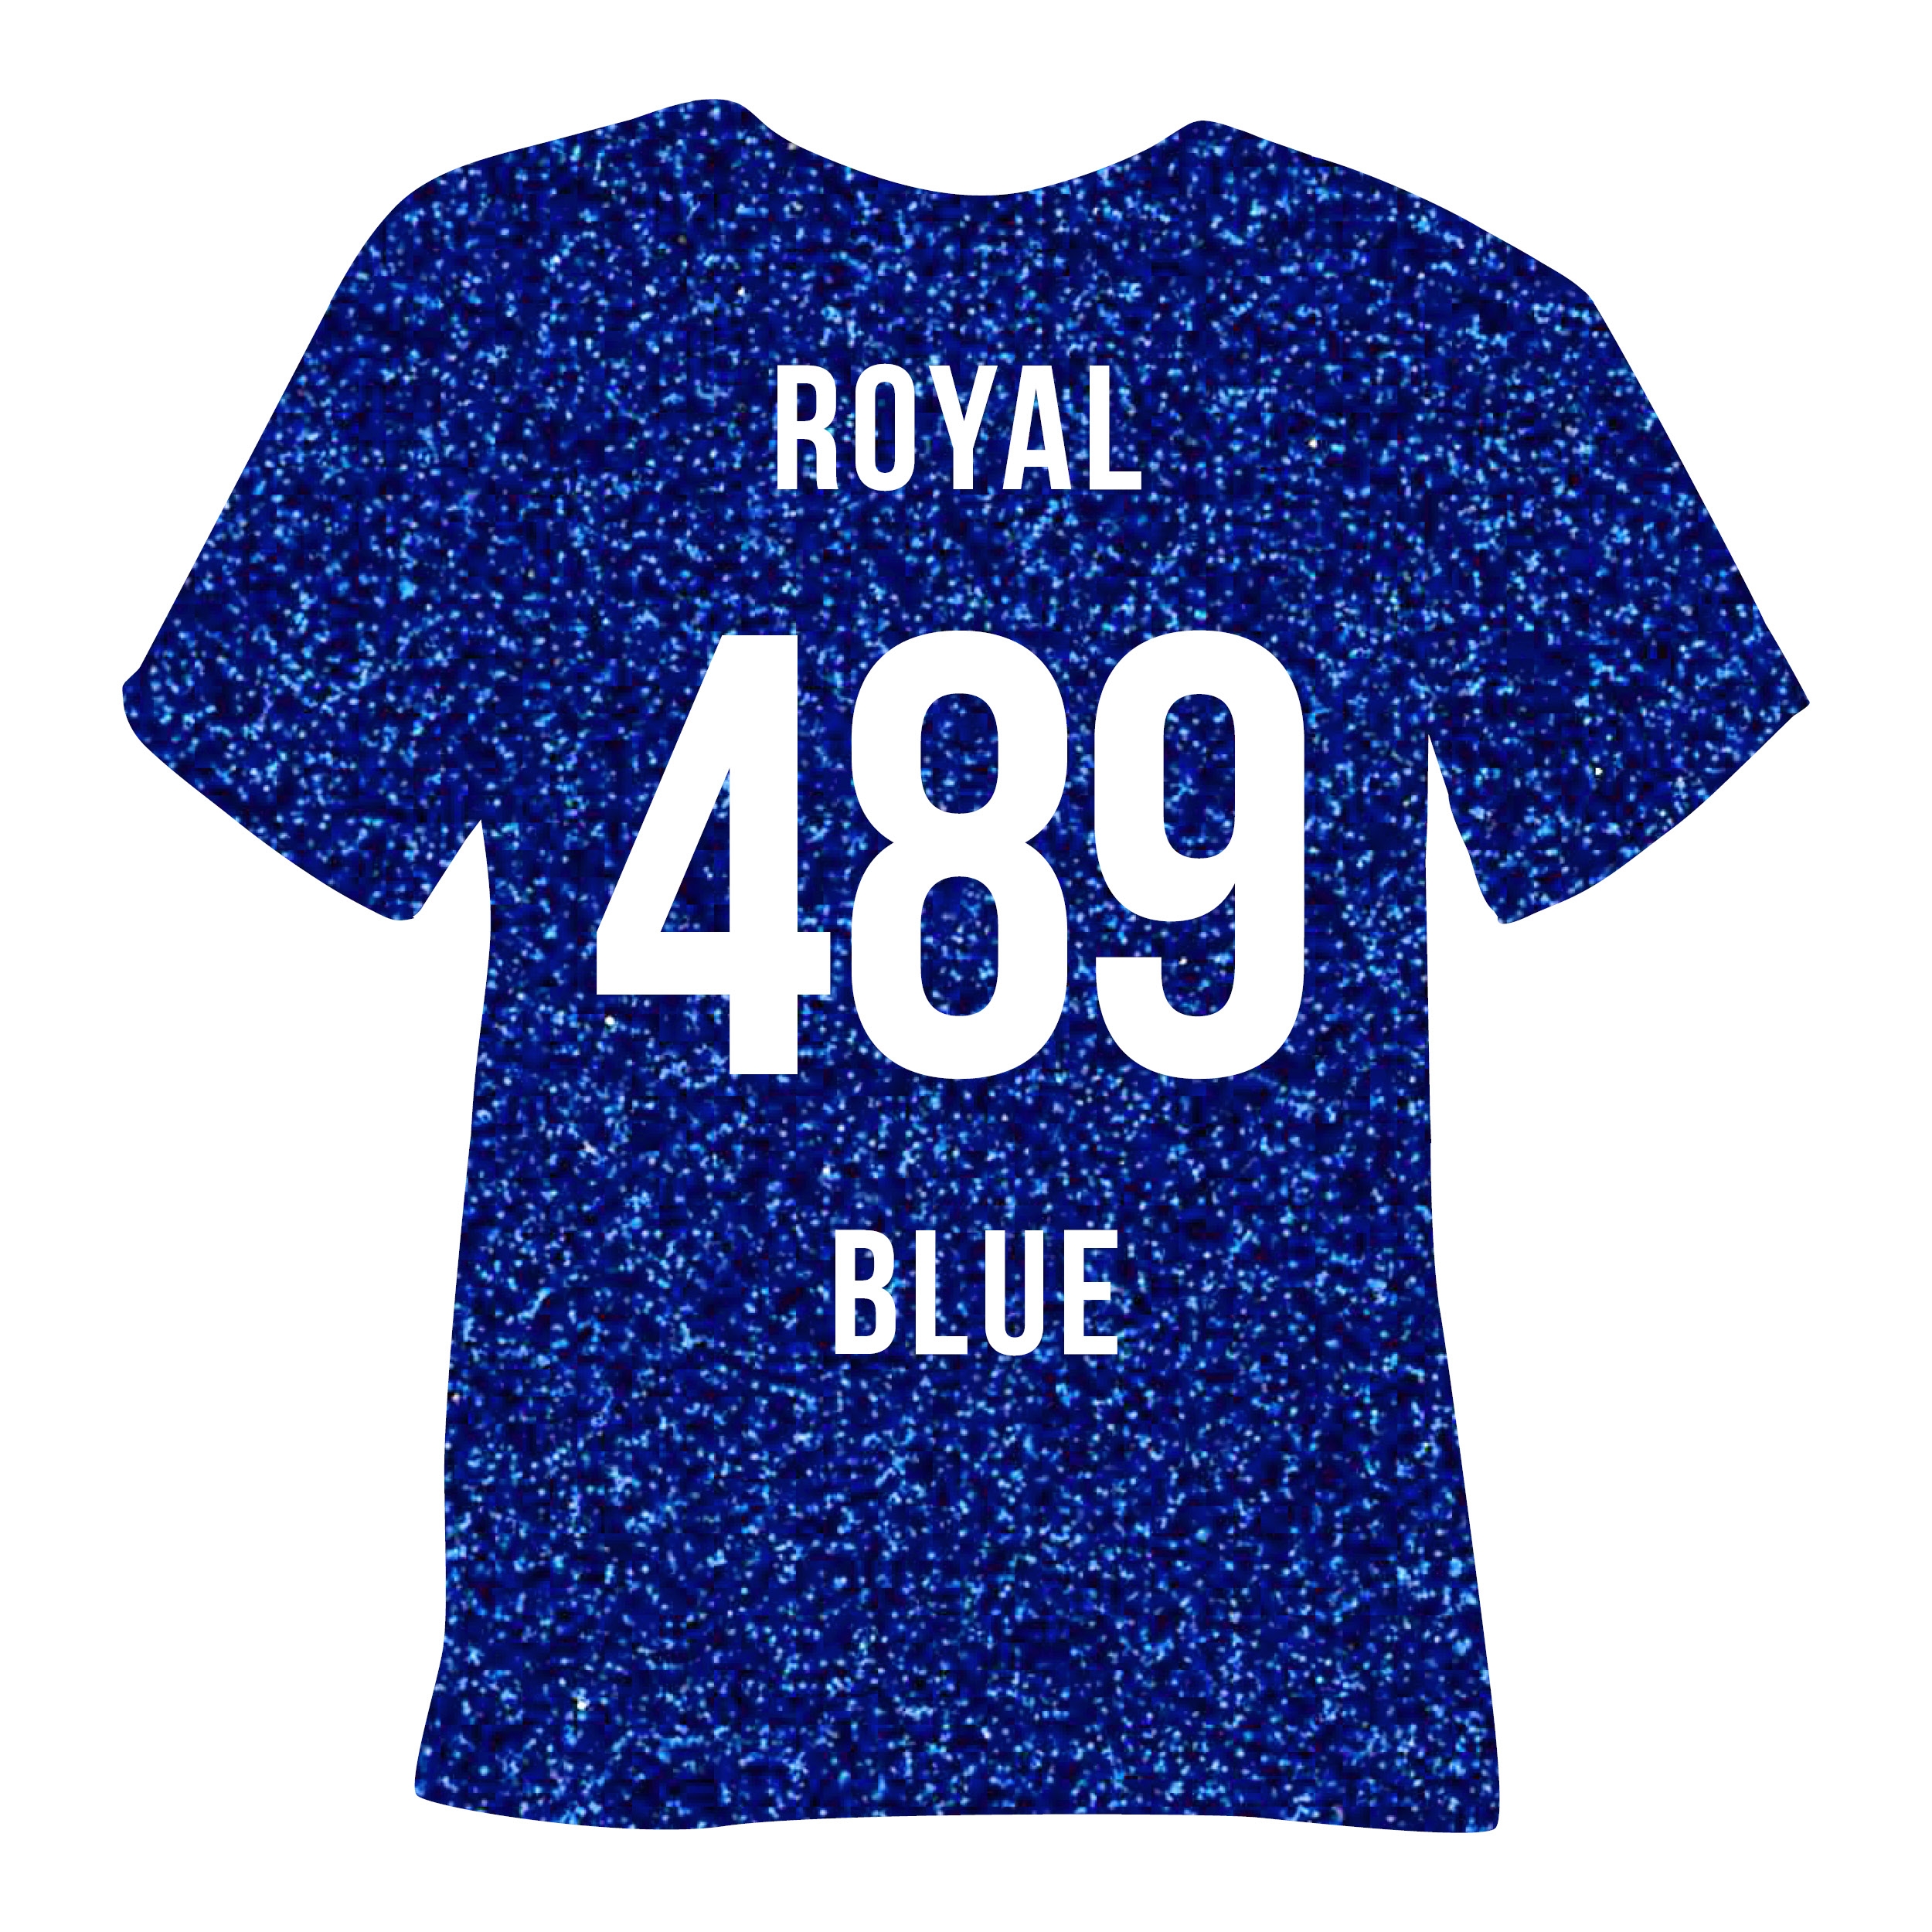 489 royal blue